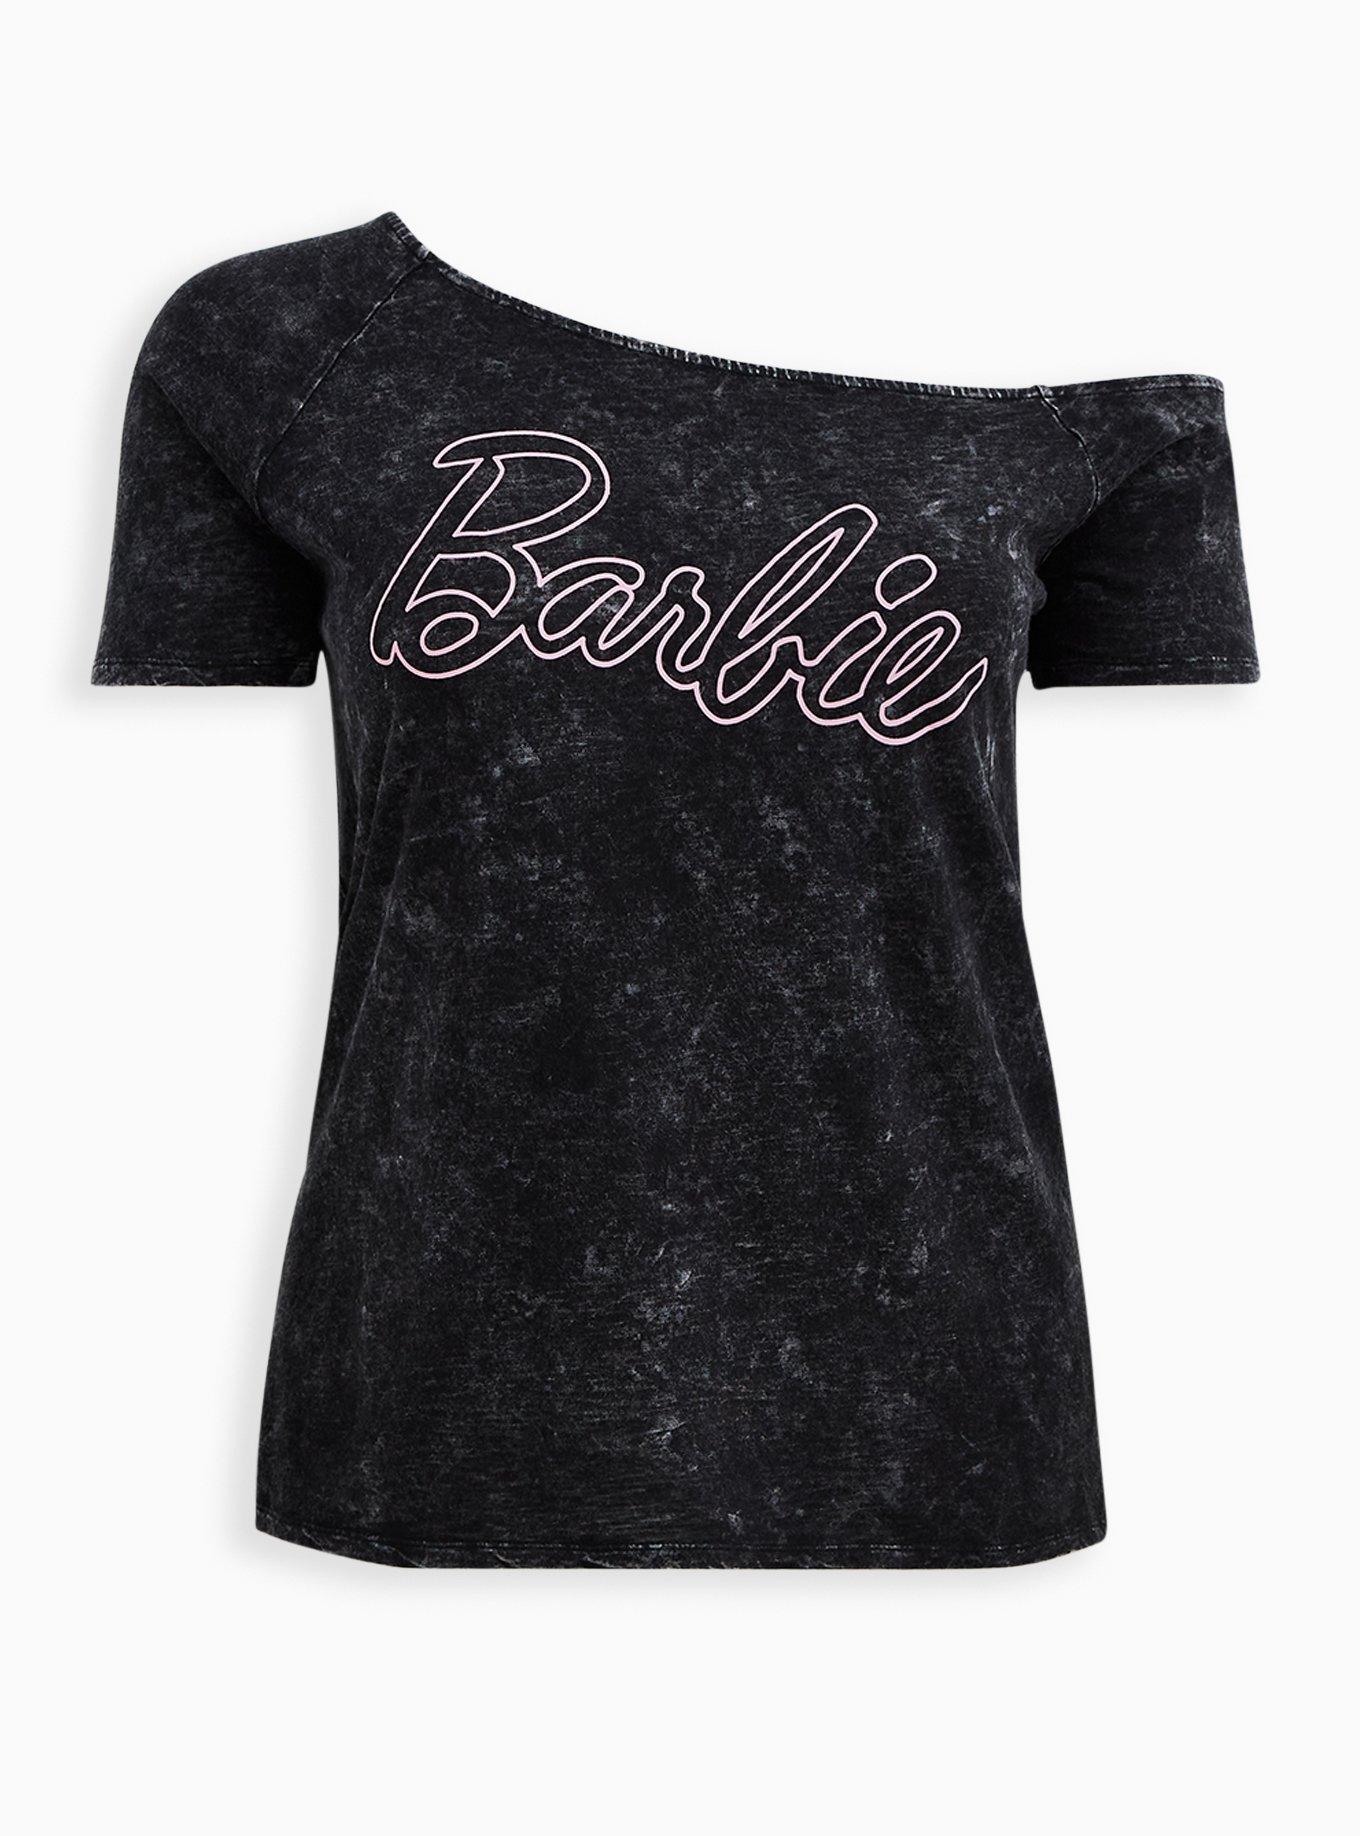 Backwoods Barbie T-Shirt Camo Design Hot Pink “Shopping W/ My Husband Is  Like..